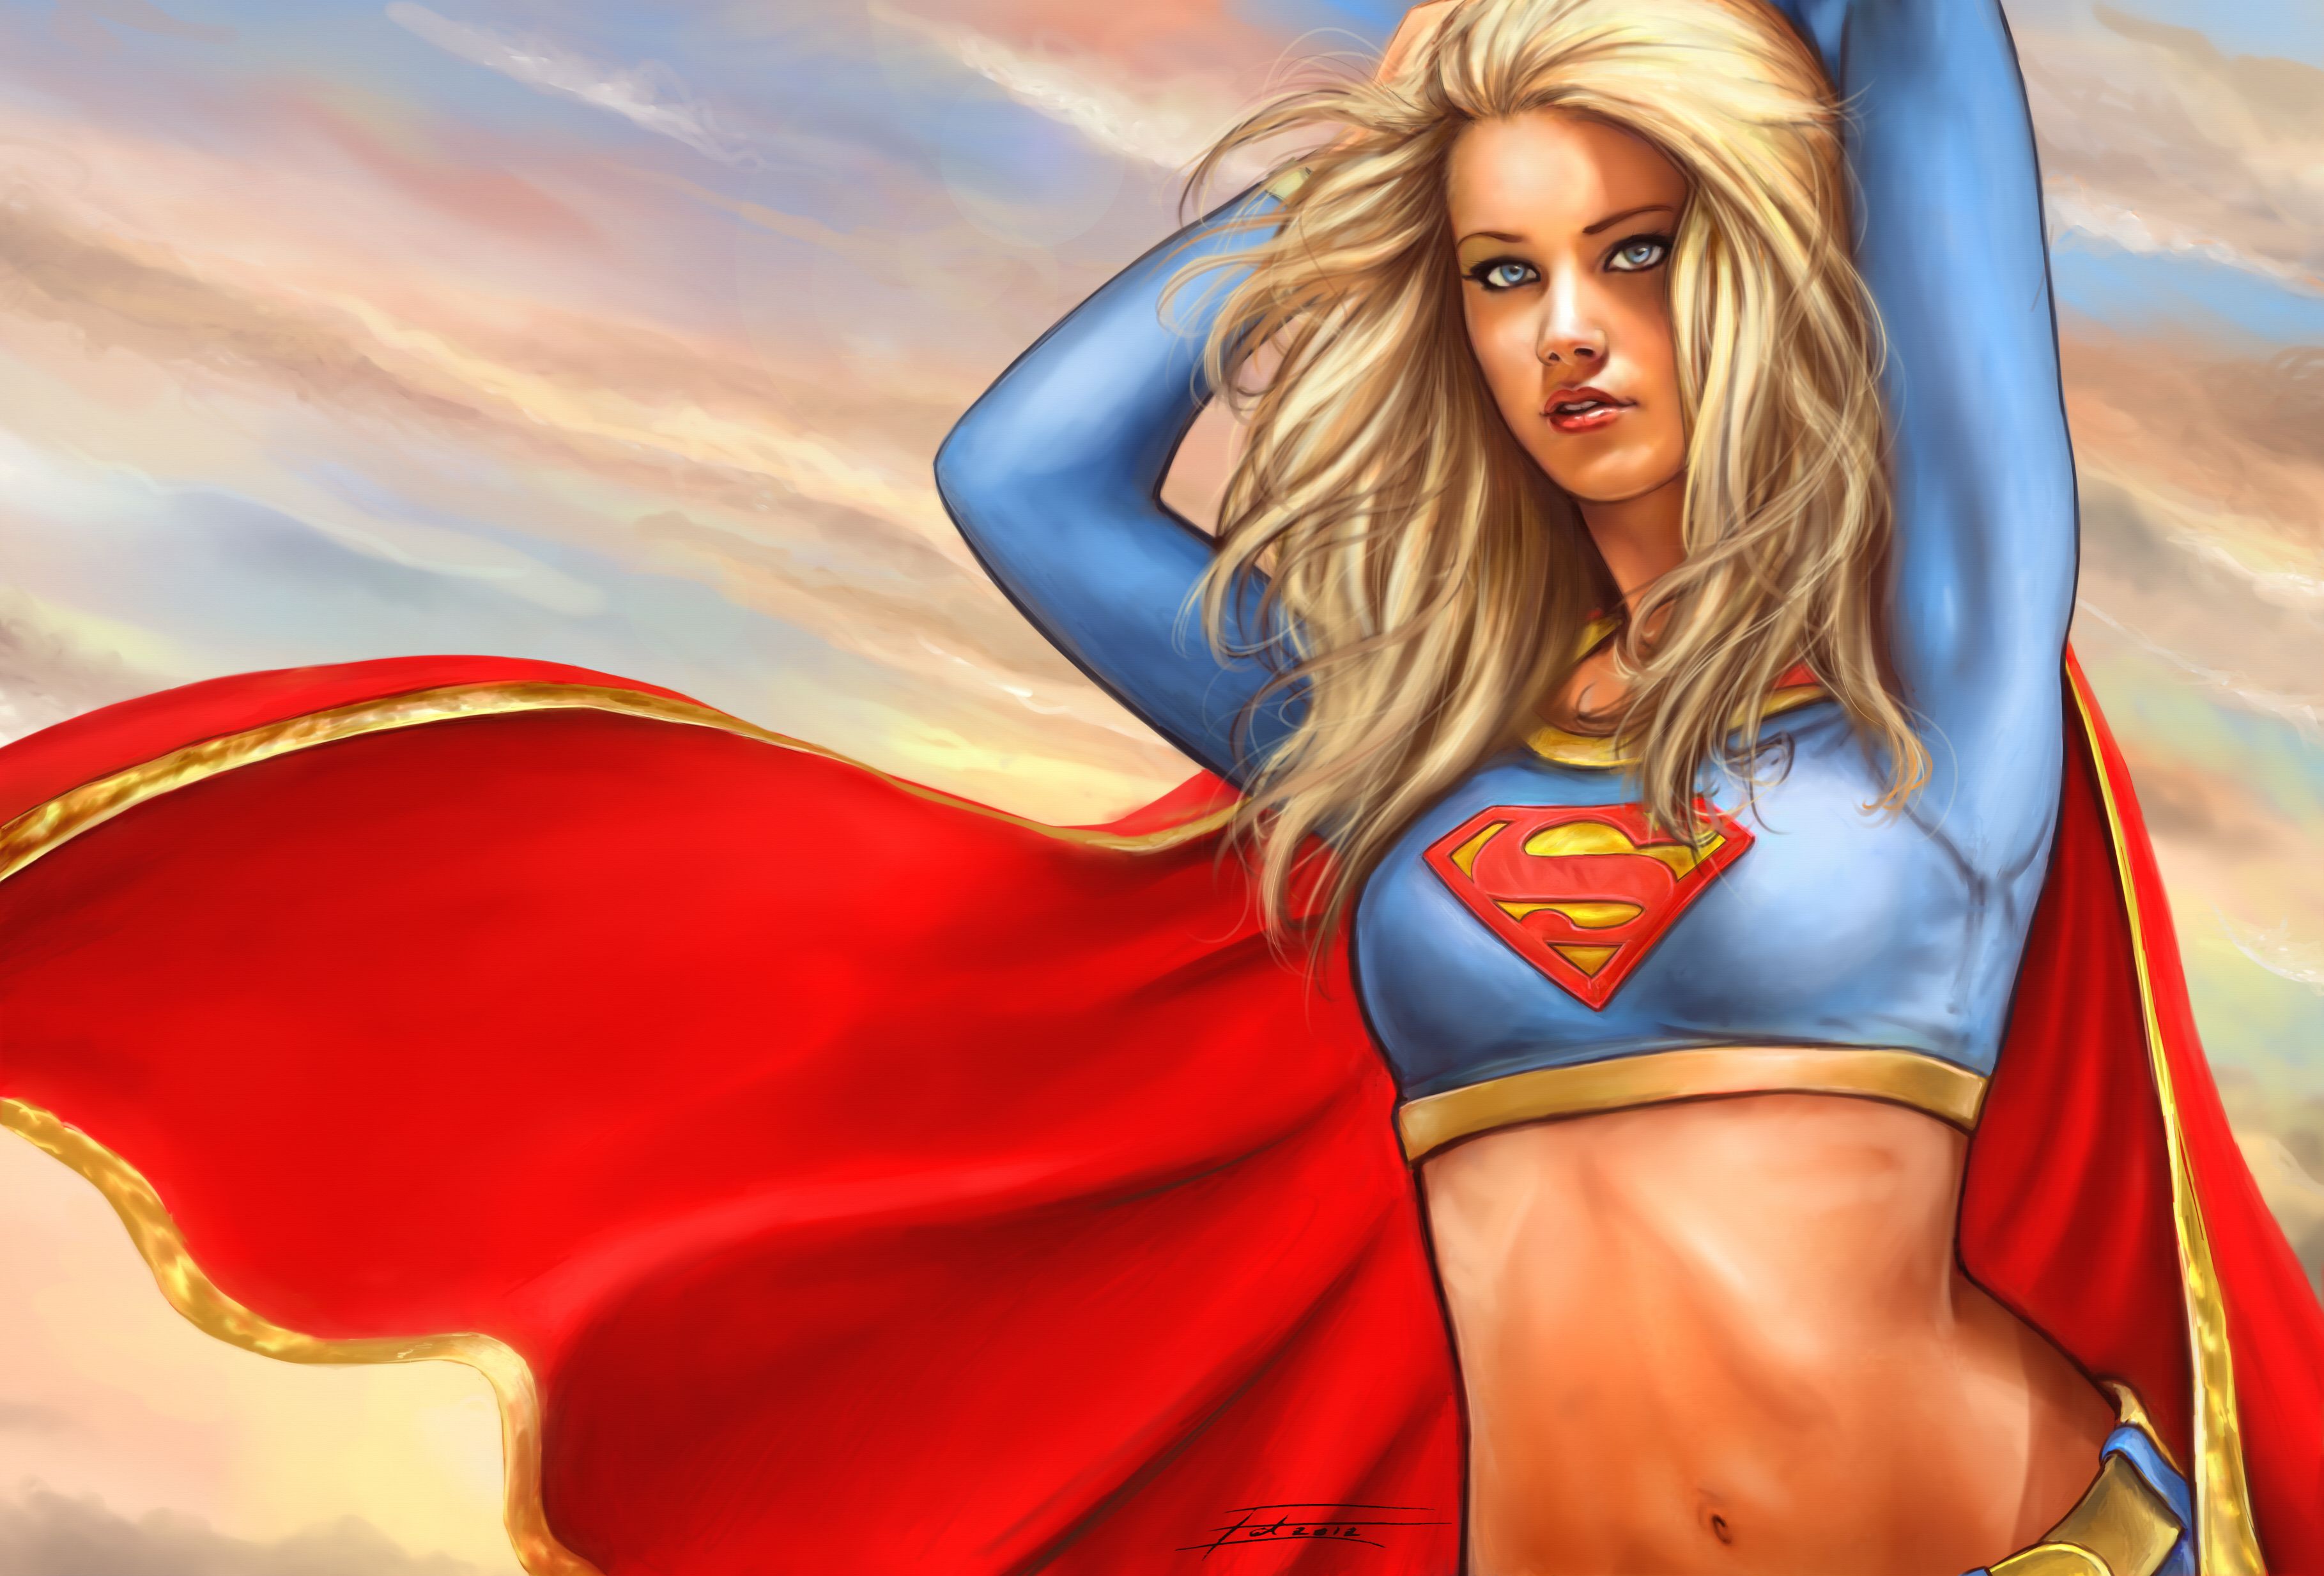 heroes, Comics, Supergirl, Blonde, Girl, Fantasy, Superhero, Supergirl, Superwoman Wallpaper HD / Desktop and Mobile Background